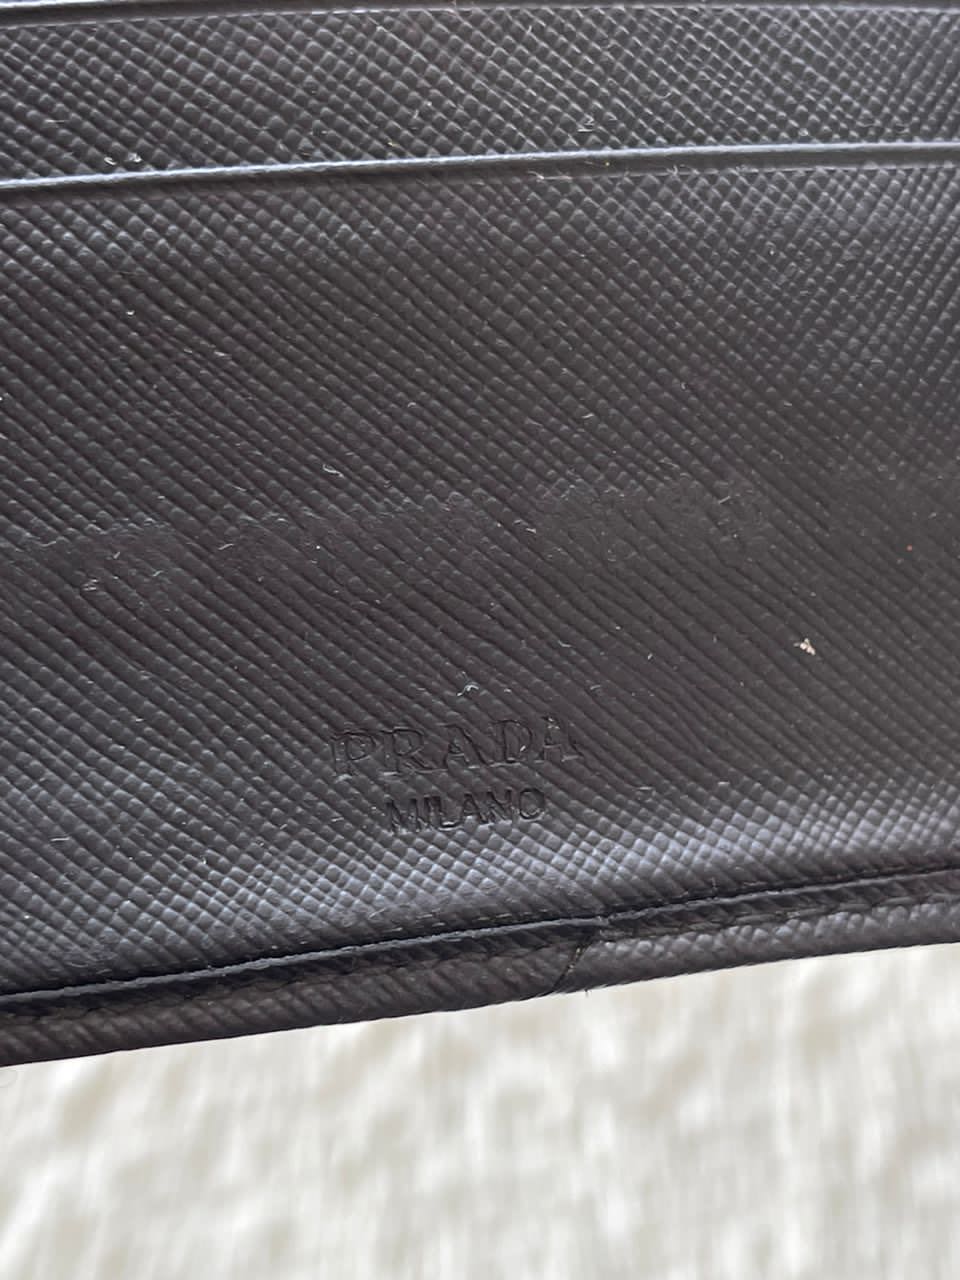 Prada Saffiano Leather Wallet - 6